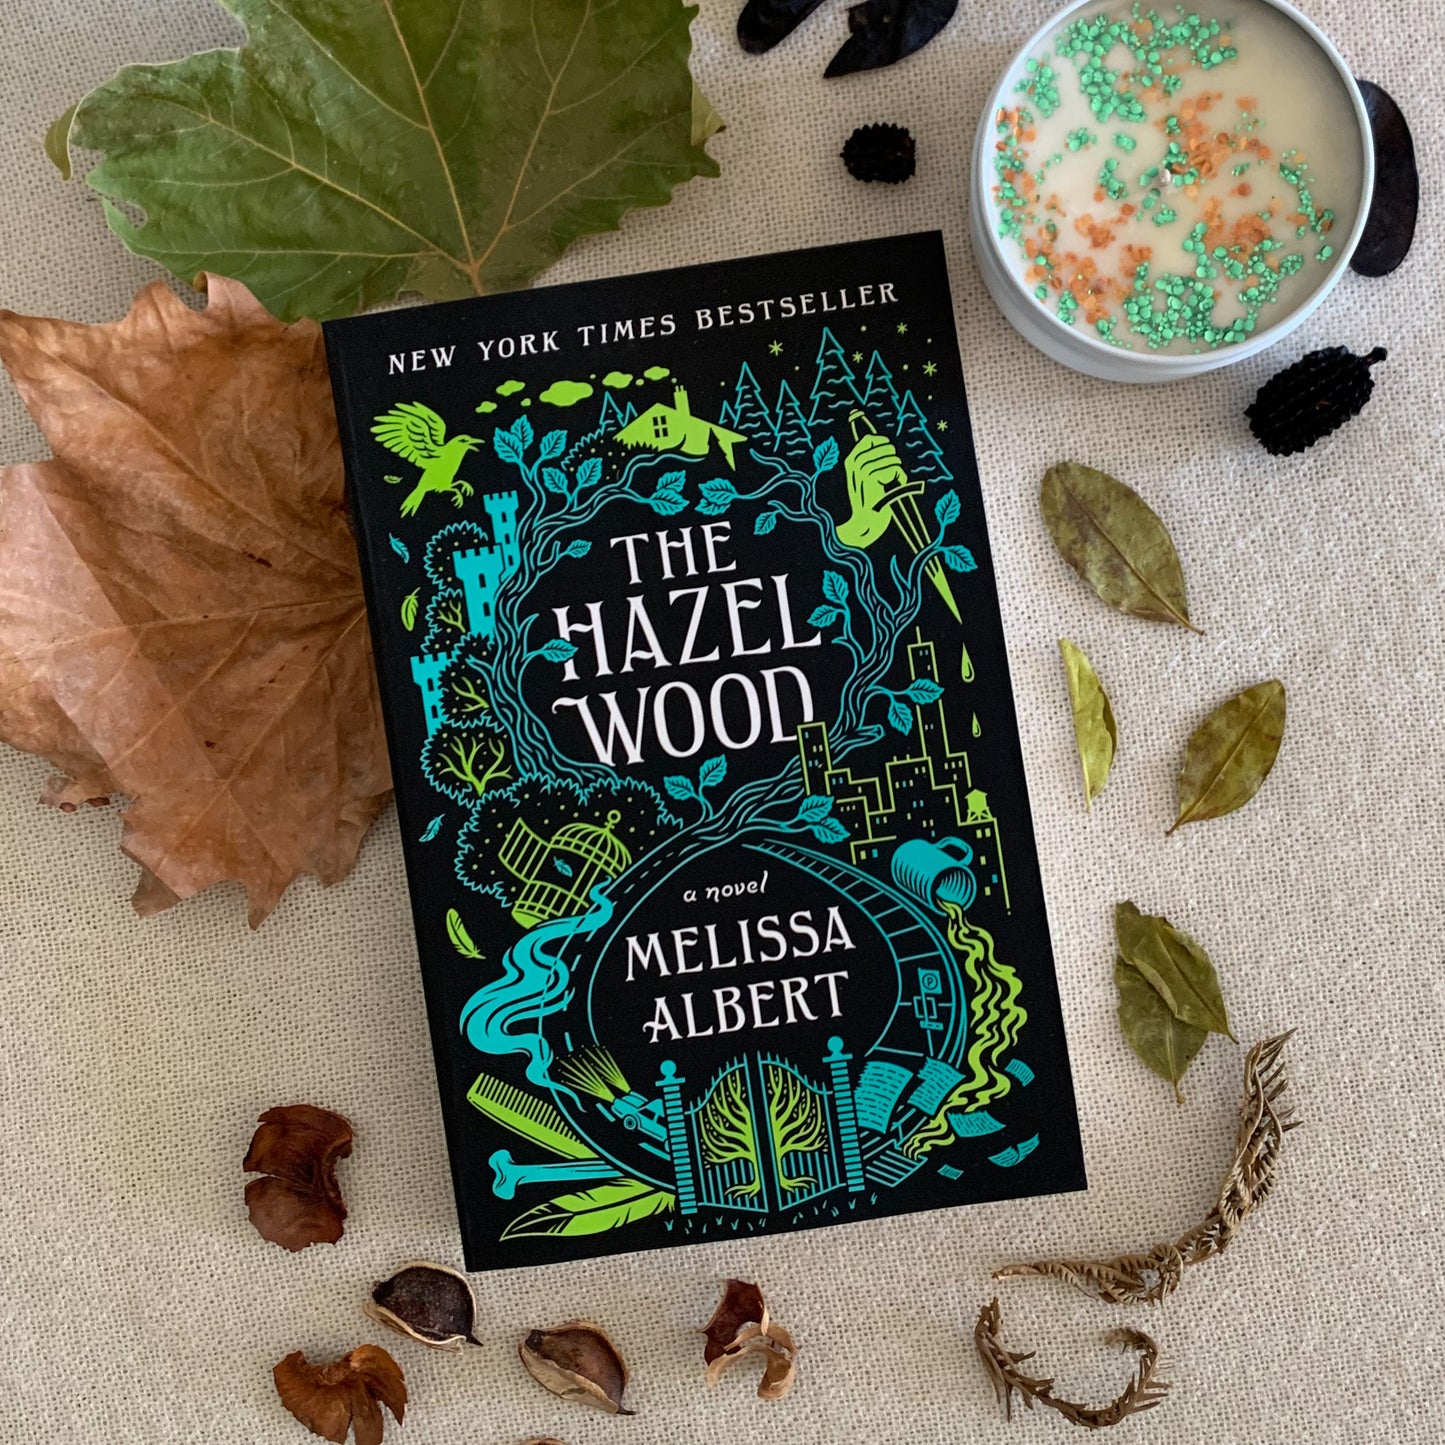 The Hazel Wood Series by Melissa Albert